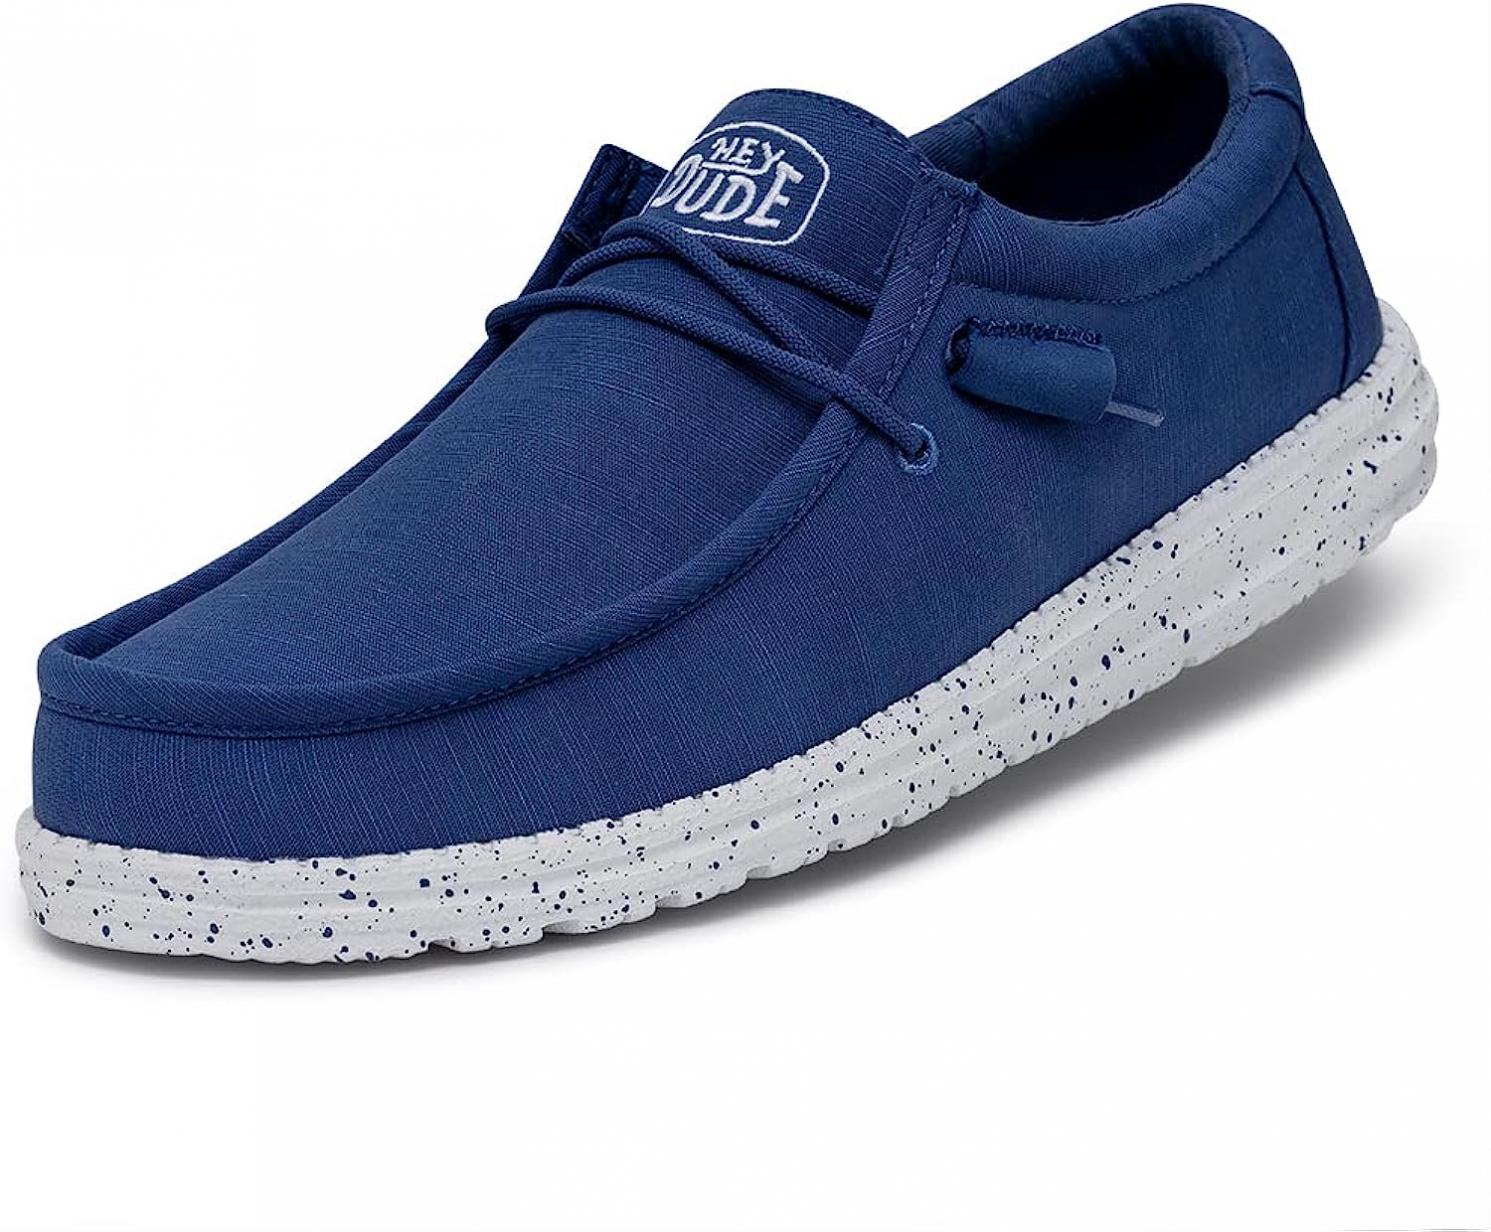 Hey Dude Men's Wally Slub Canvas True Blue Size 12| Men's Loafers | Men's Slip On Shoes | Comfortable & Light-Weight